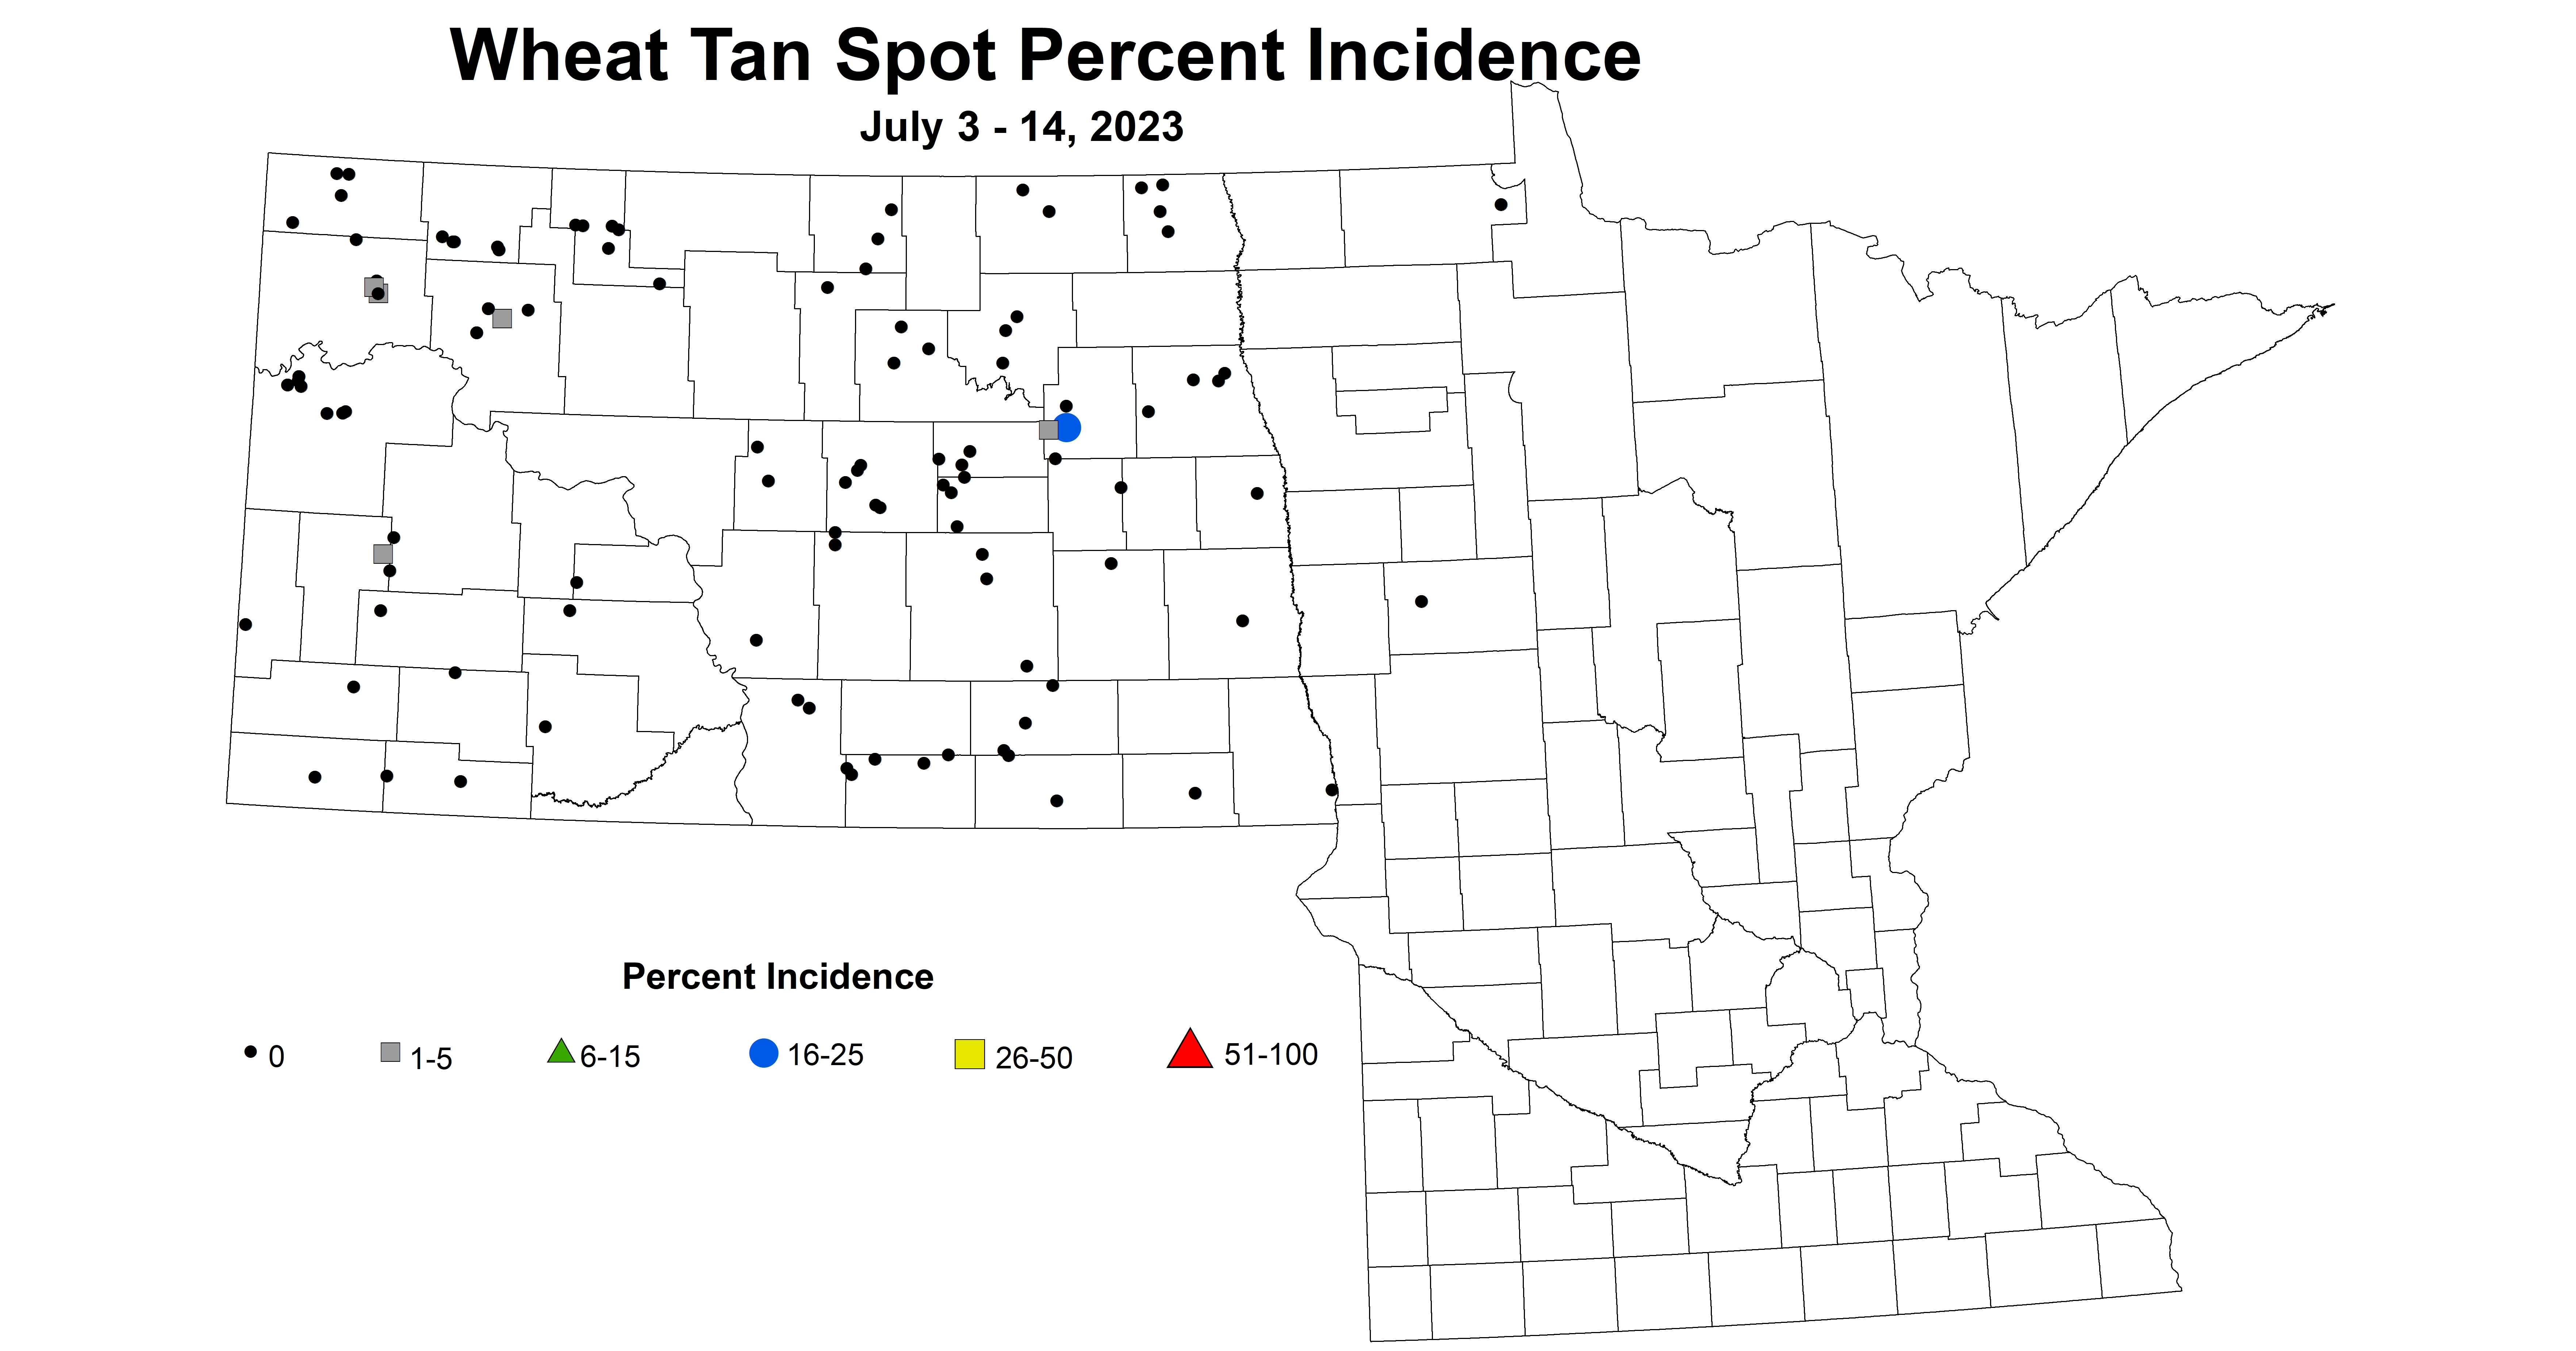 wheat tan spot incidence July 3-14 2023